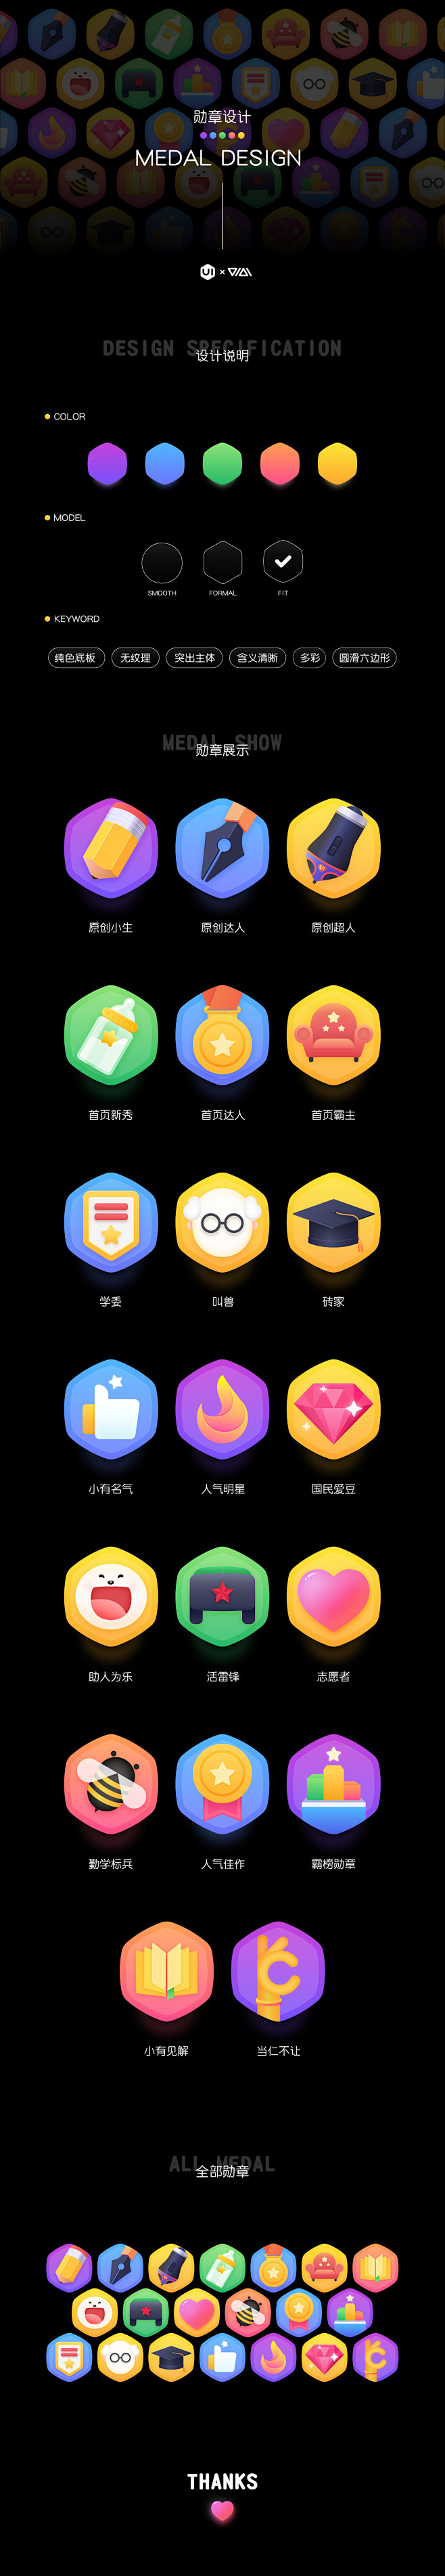 UI中国徽章设计 By Vim